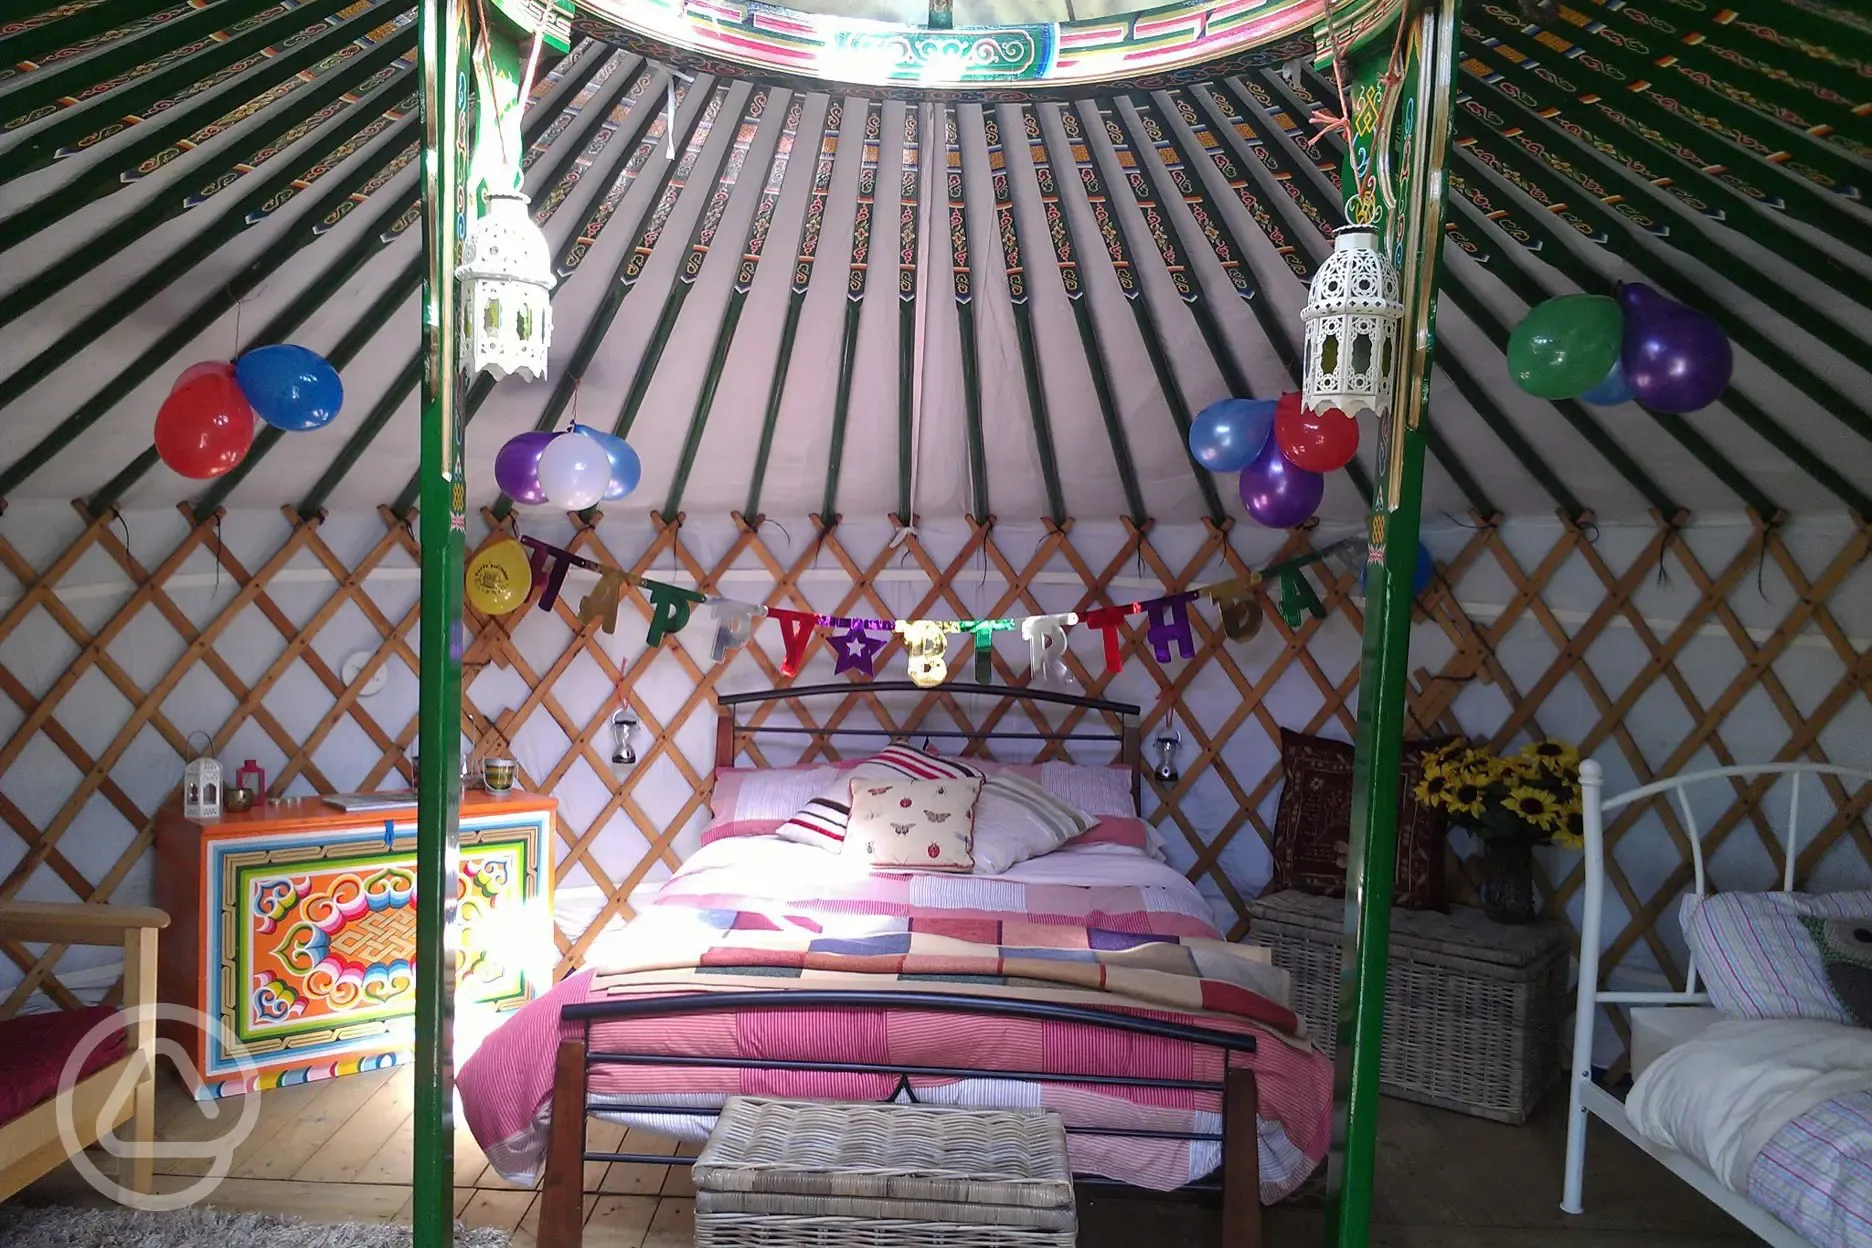 The yurt at Westland Farm